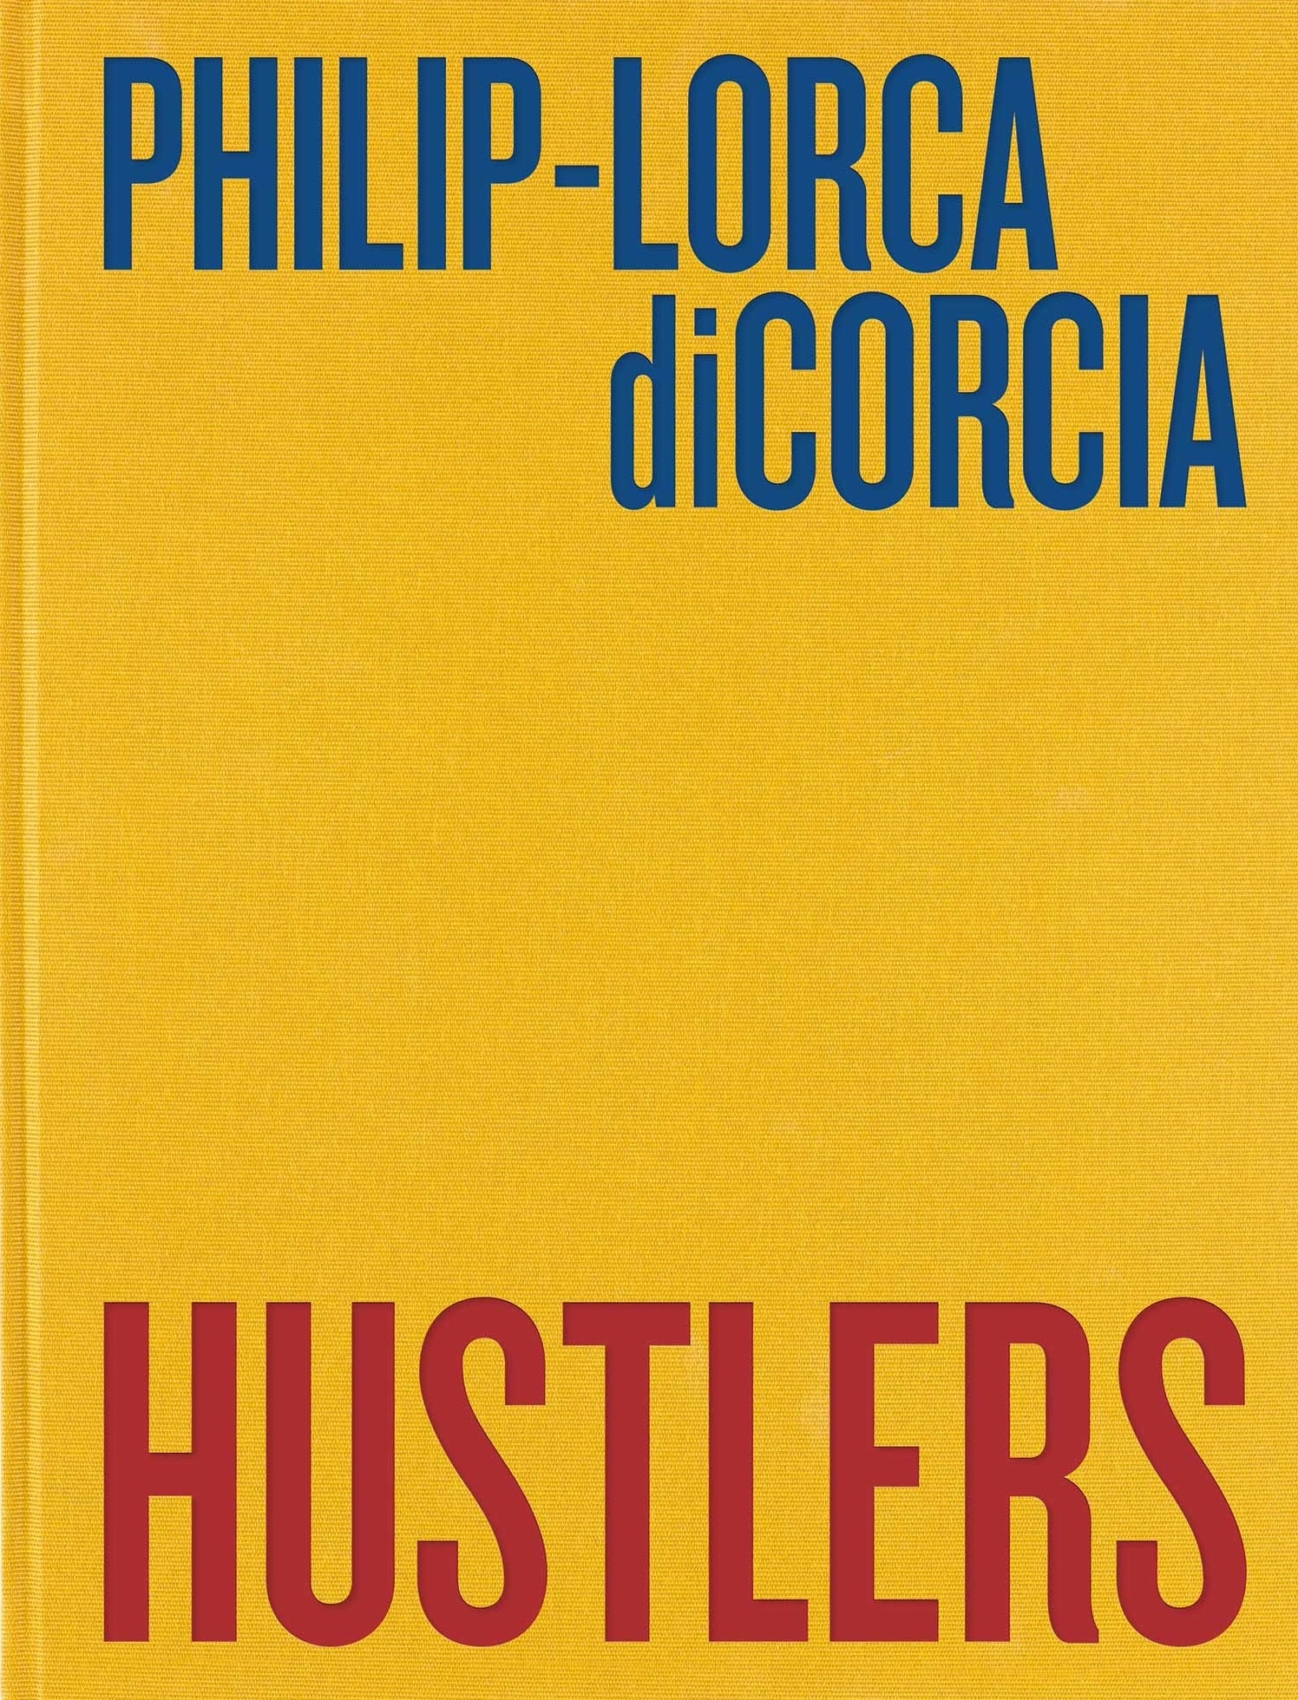 Philip Lorca diCorcia: Hustlers